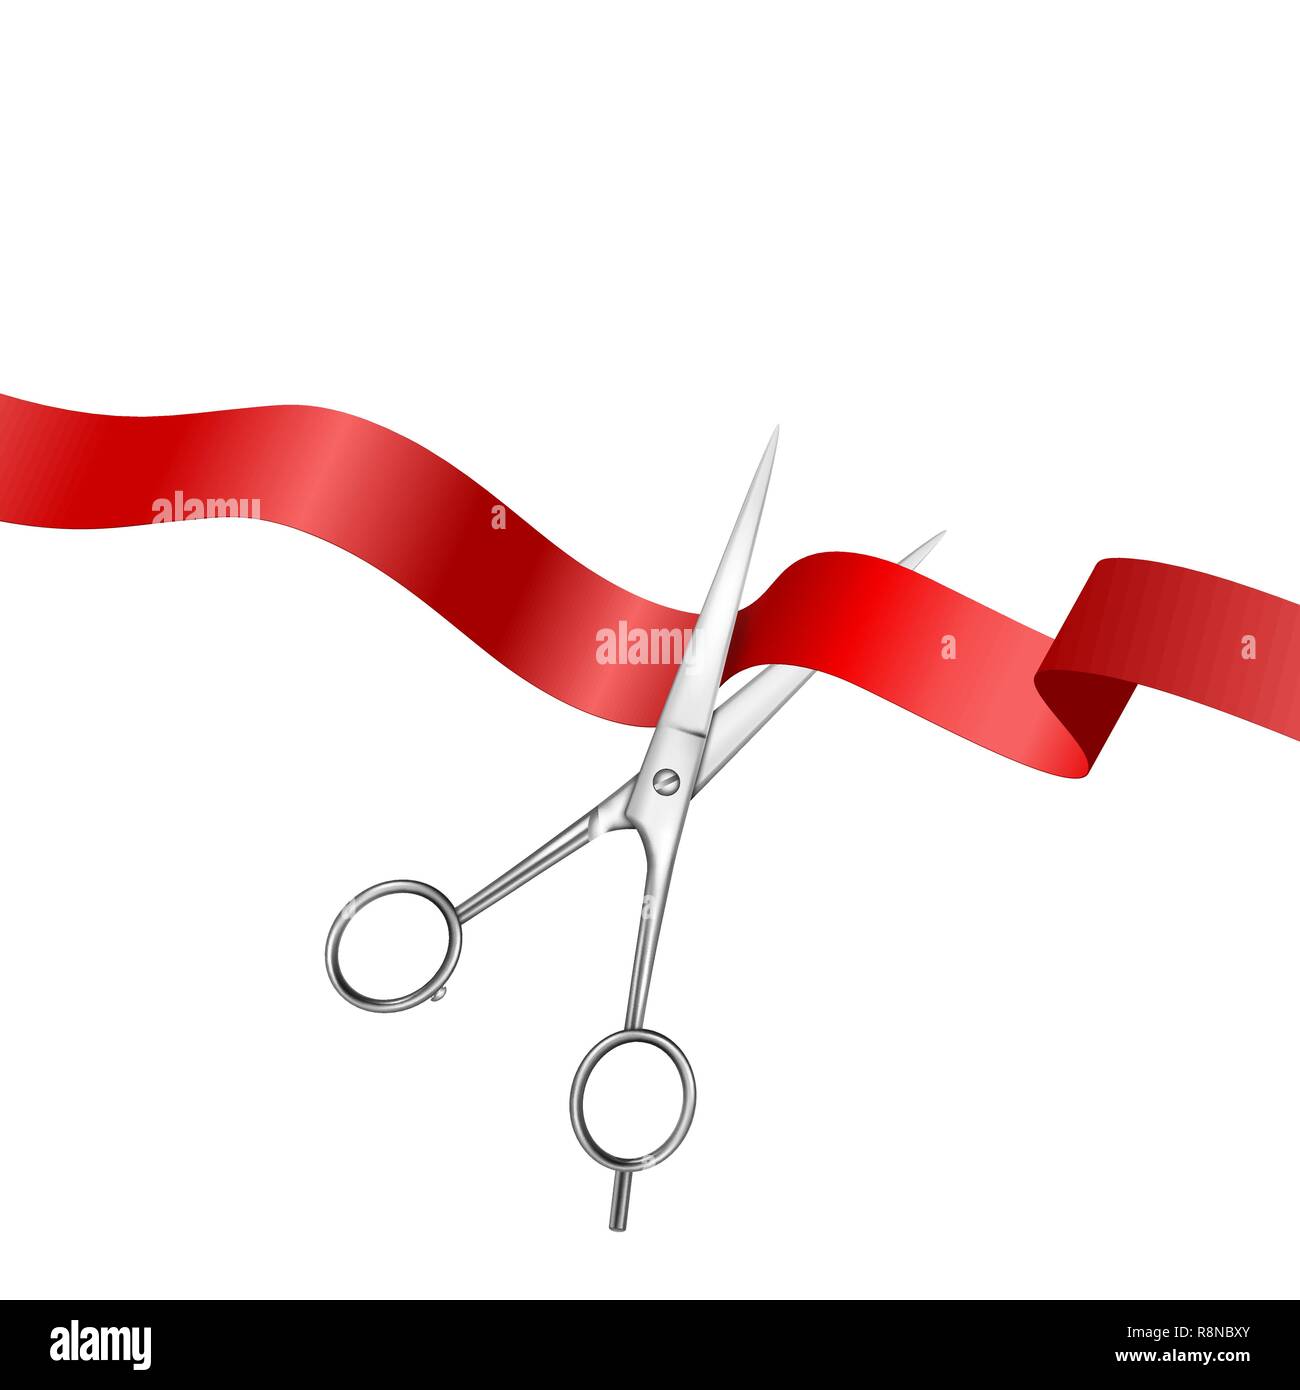 ribbon cutting design